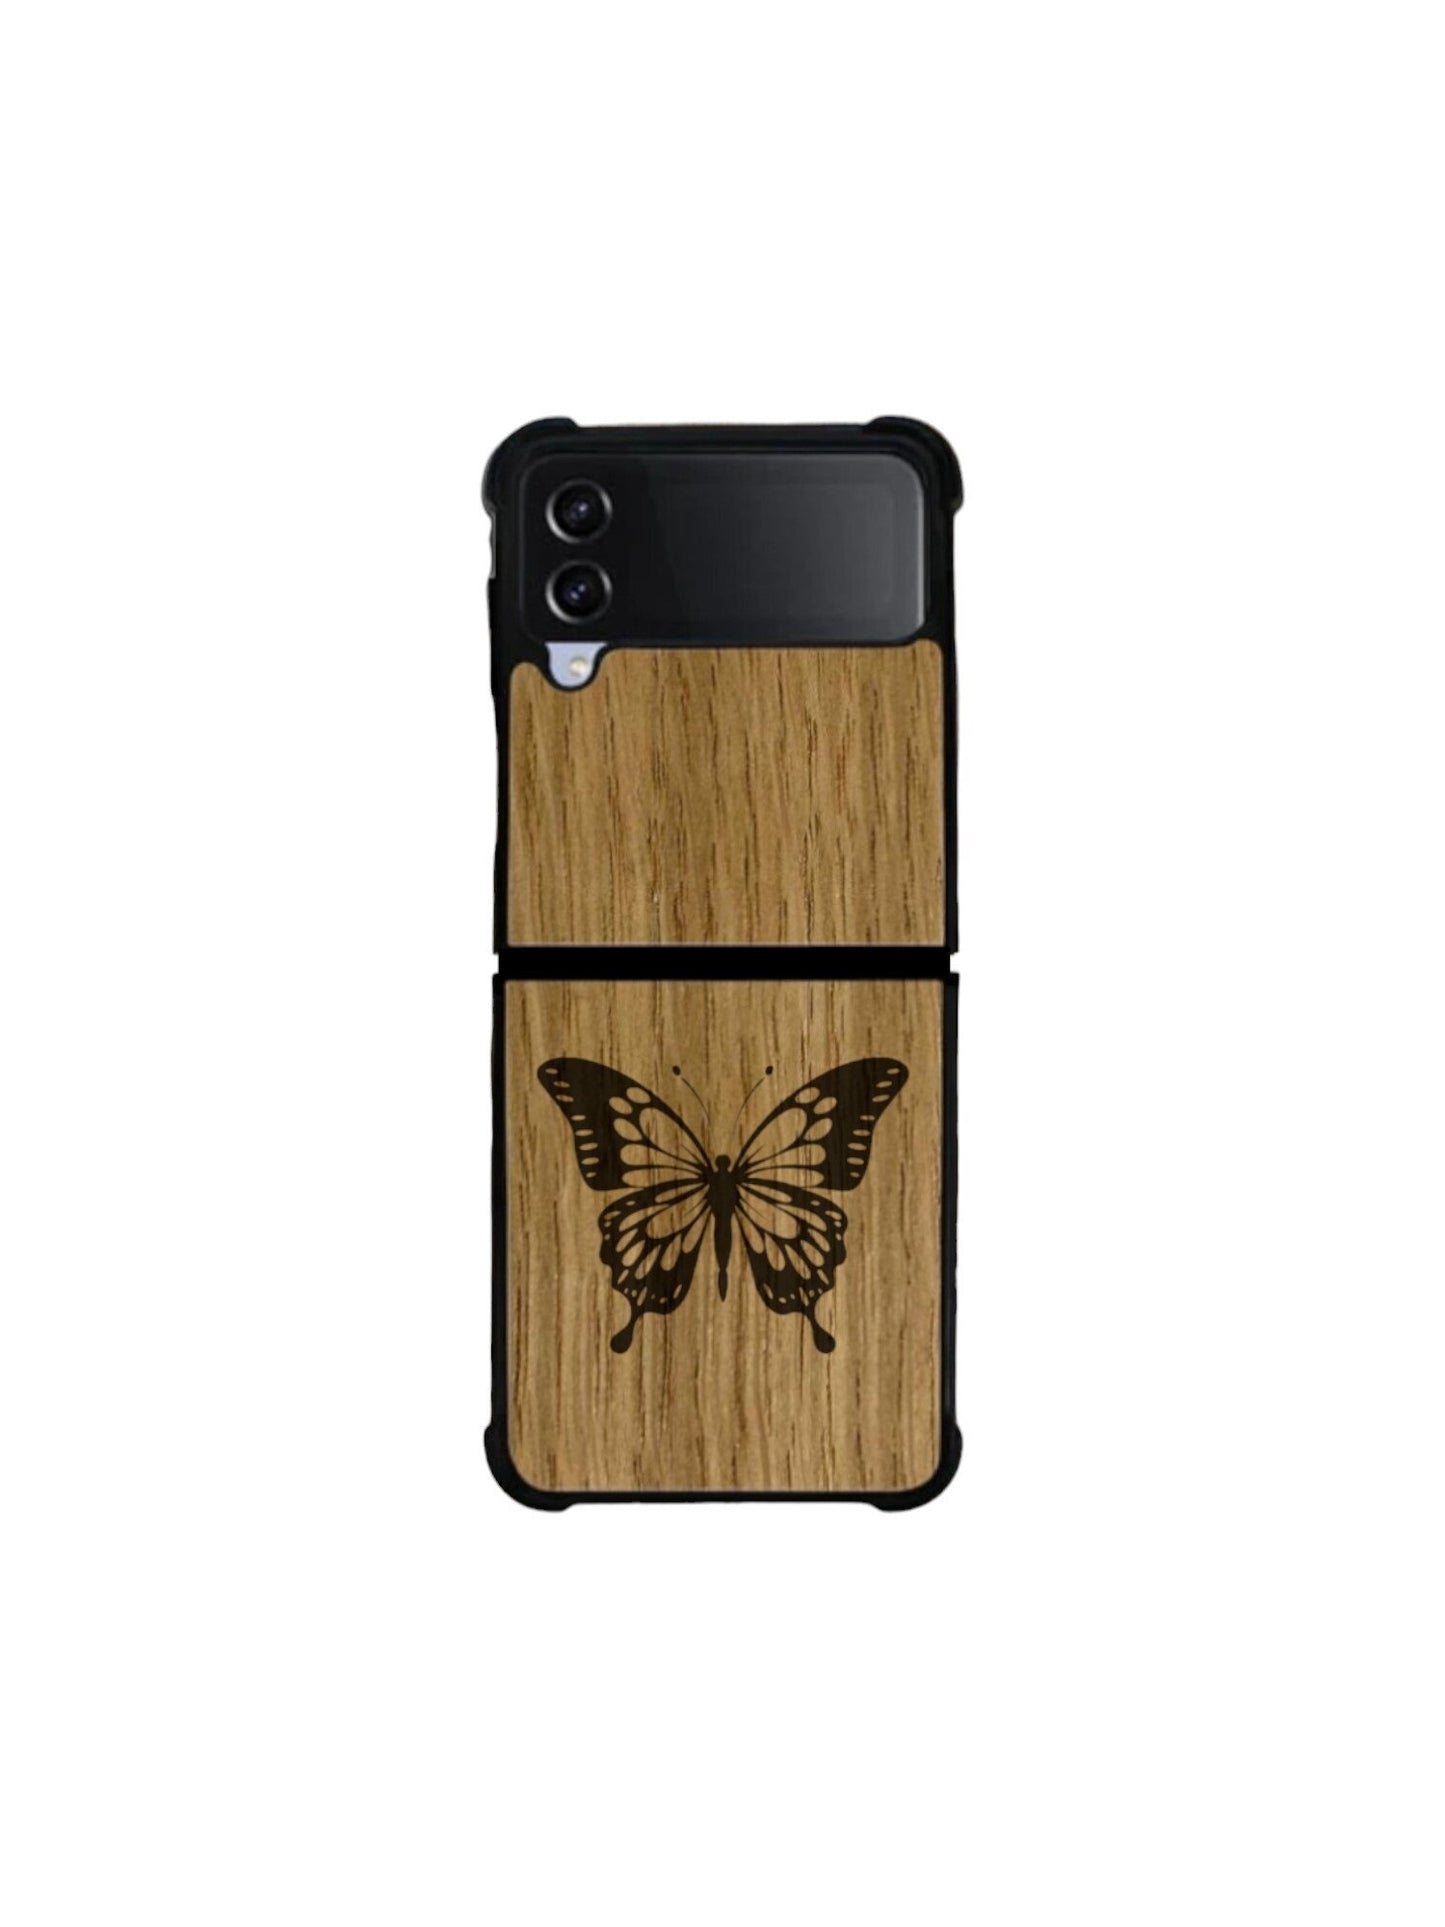 Samsung Galaxy Z Flip Case - Butterfly